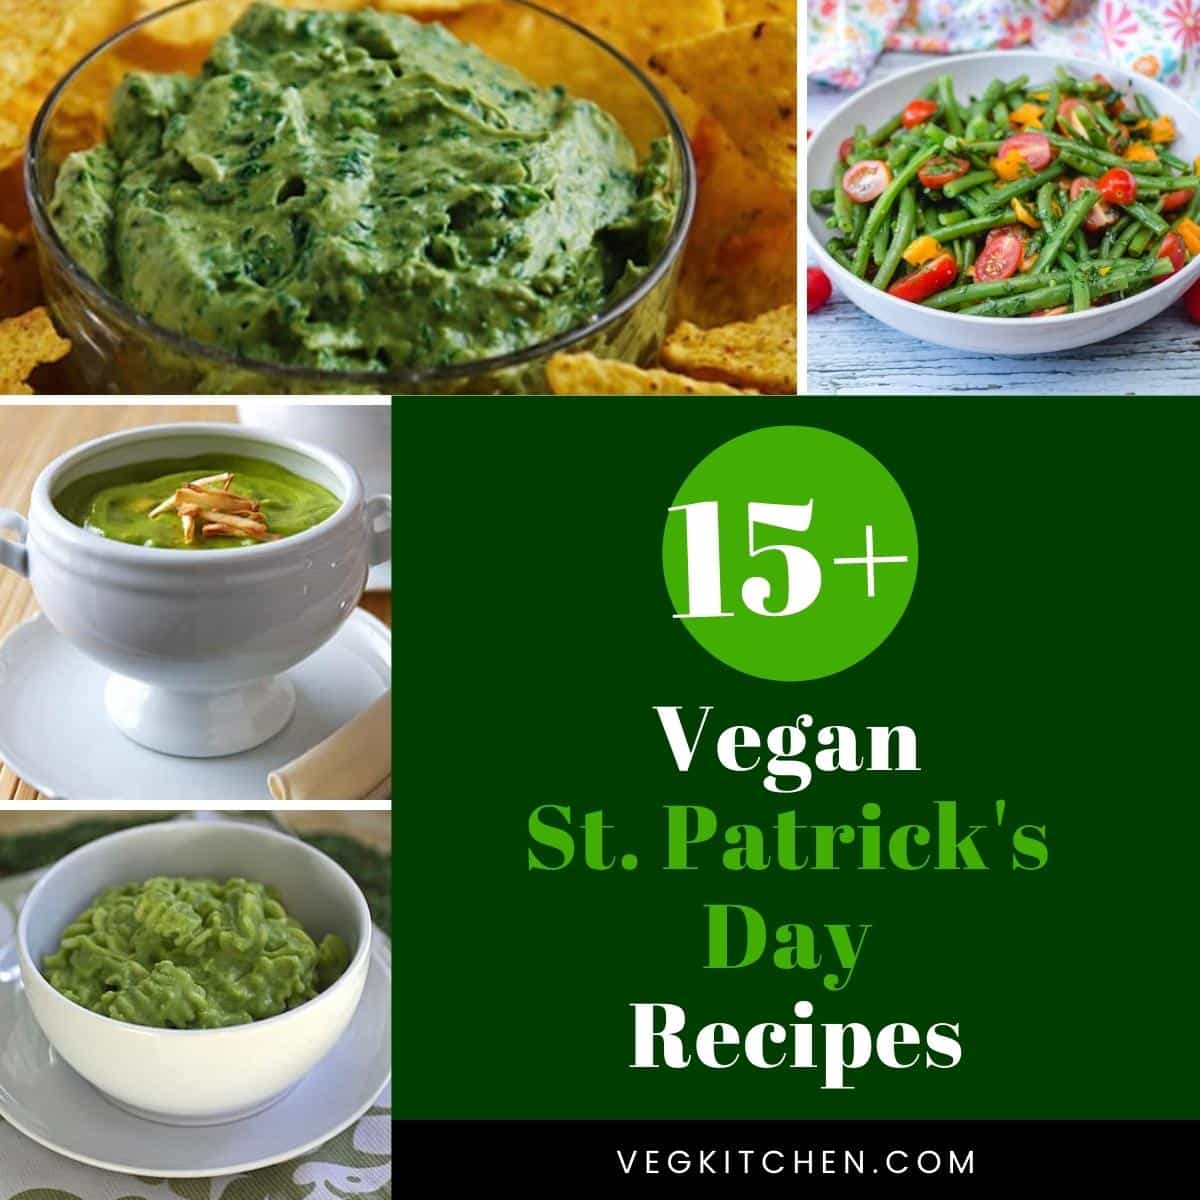 Vegan St. Patrick's Day Recipes